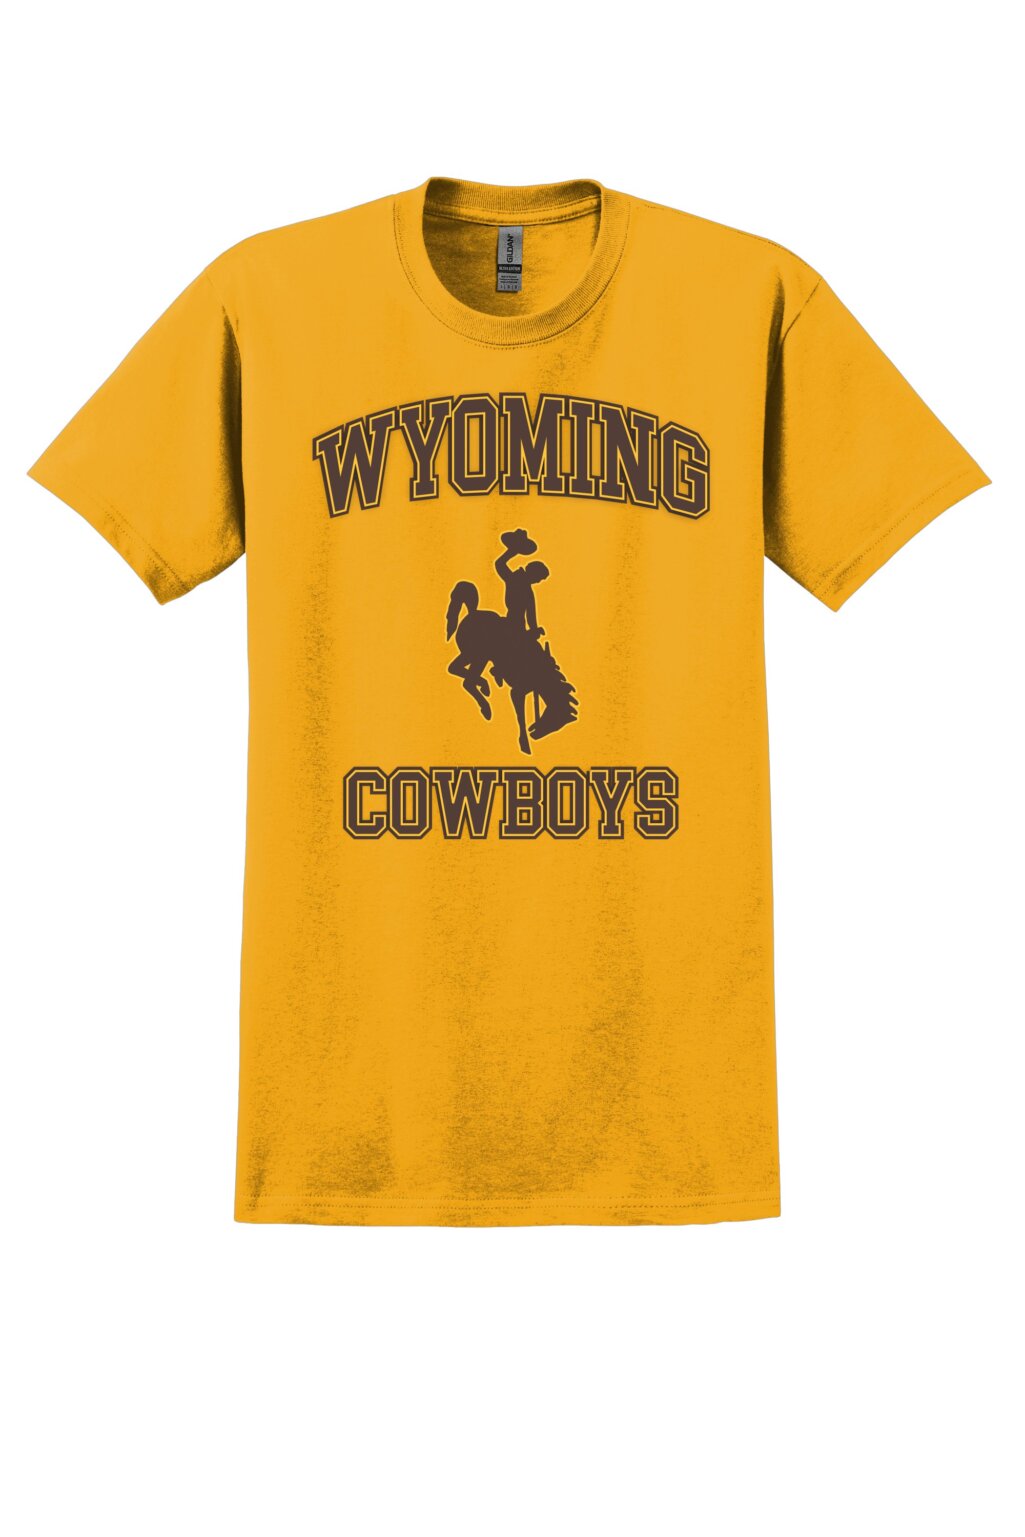 Wyoming Cowboys T-shirt - Shop Wyoming